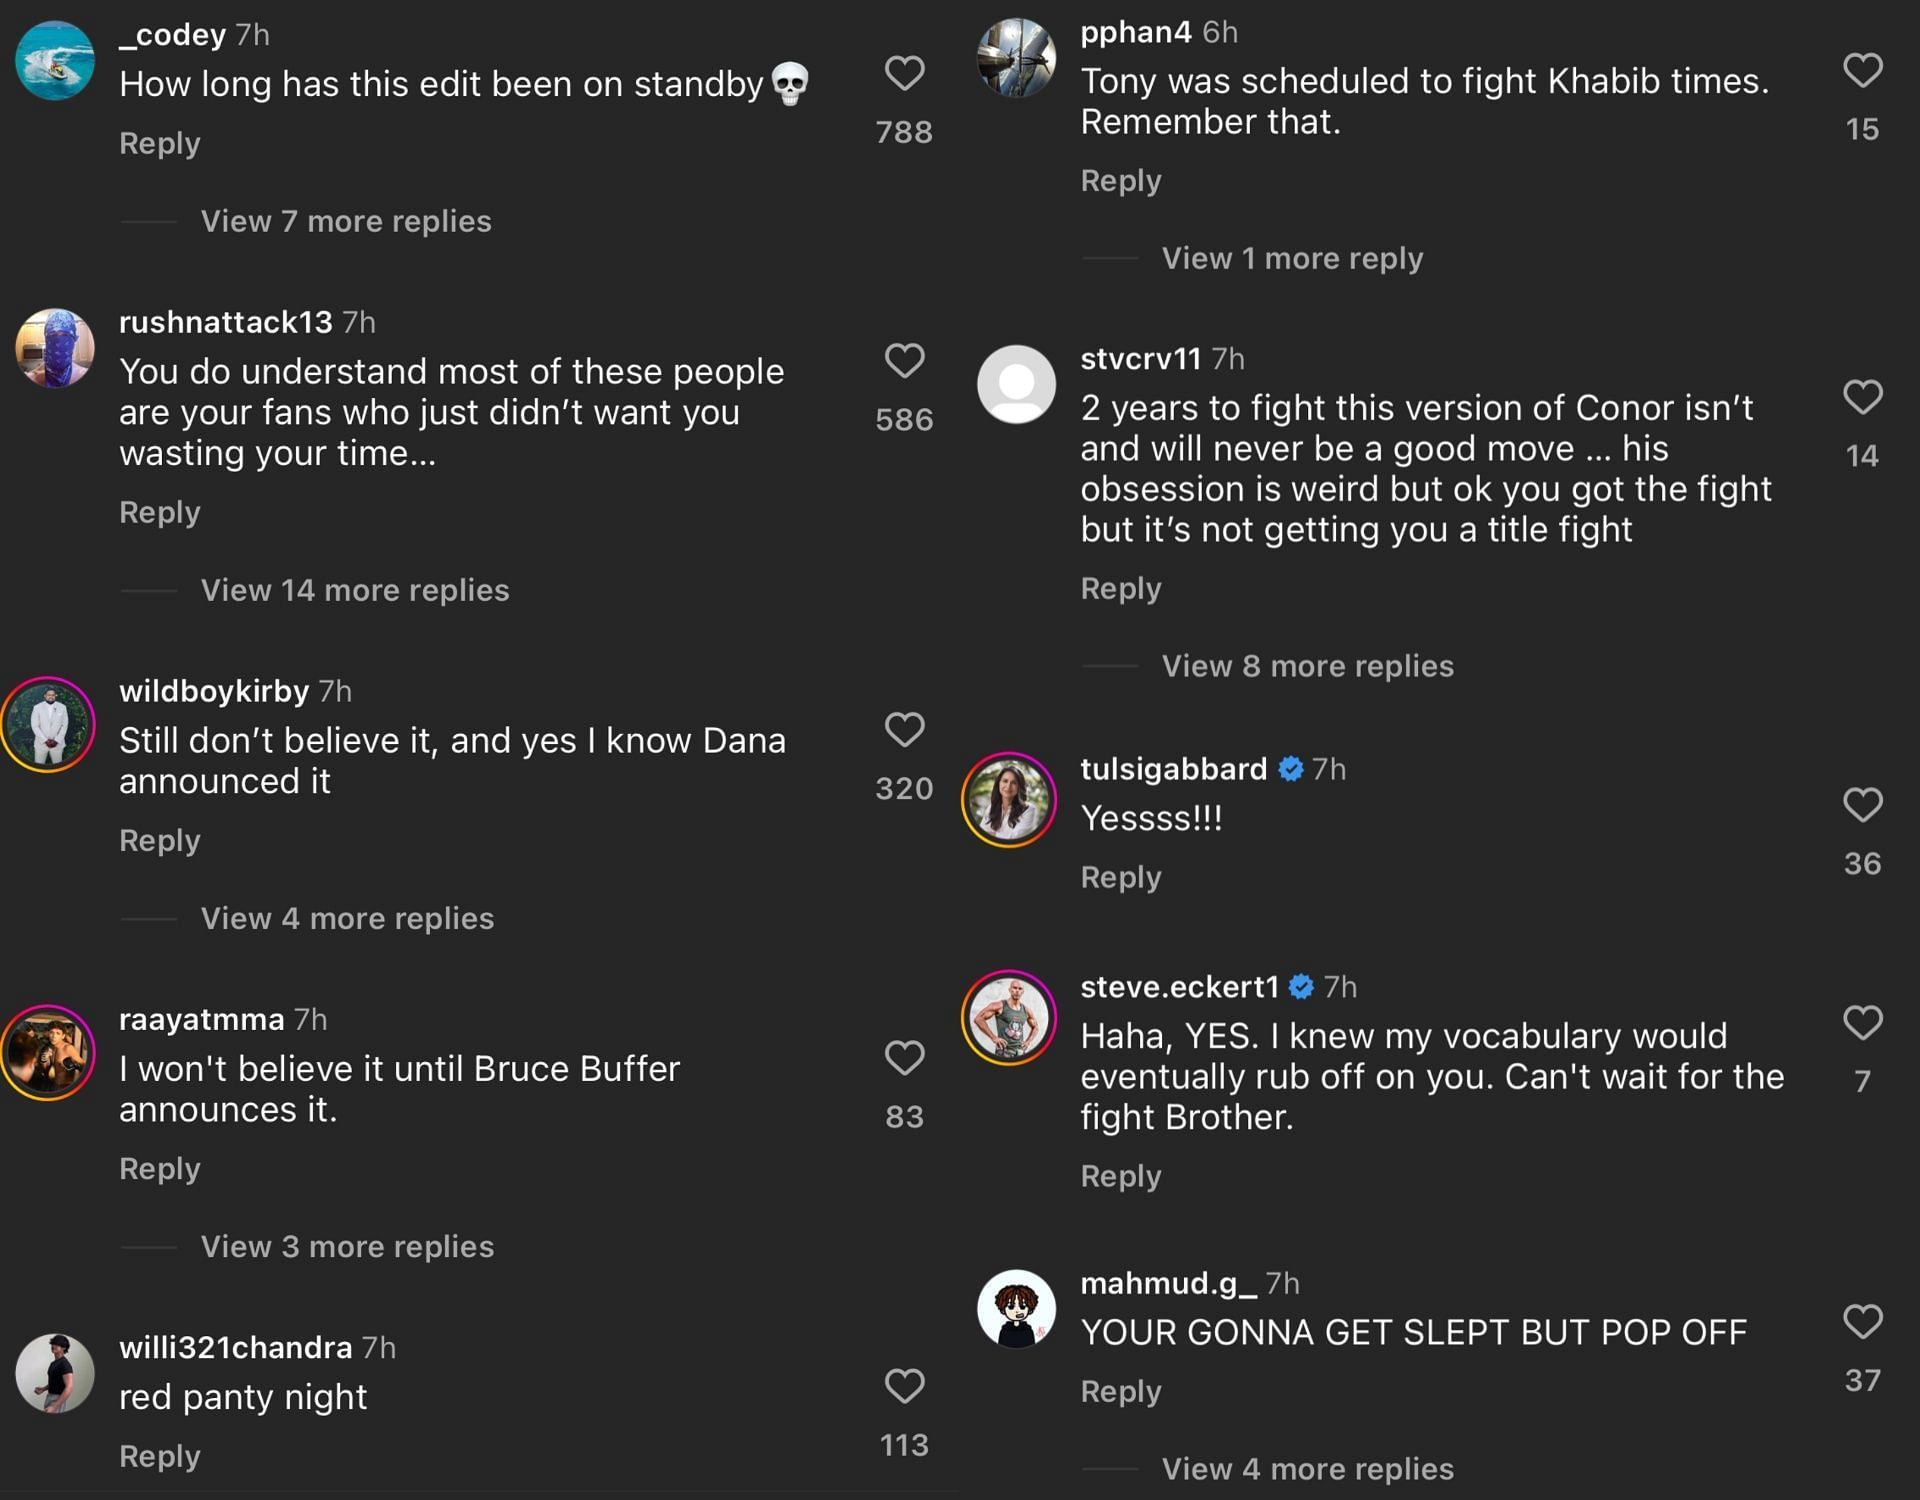 Fan reactions to the Michael Chandler vs. Conor McGregor edit